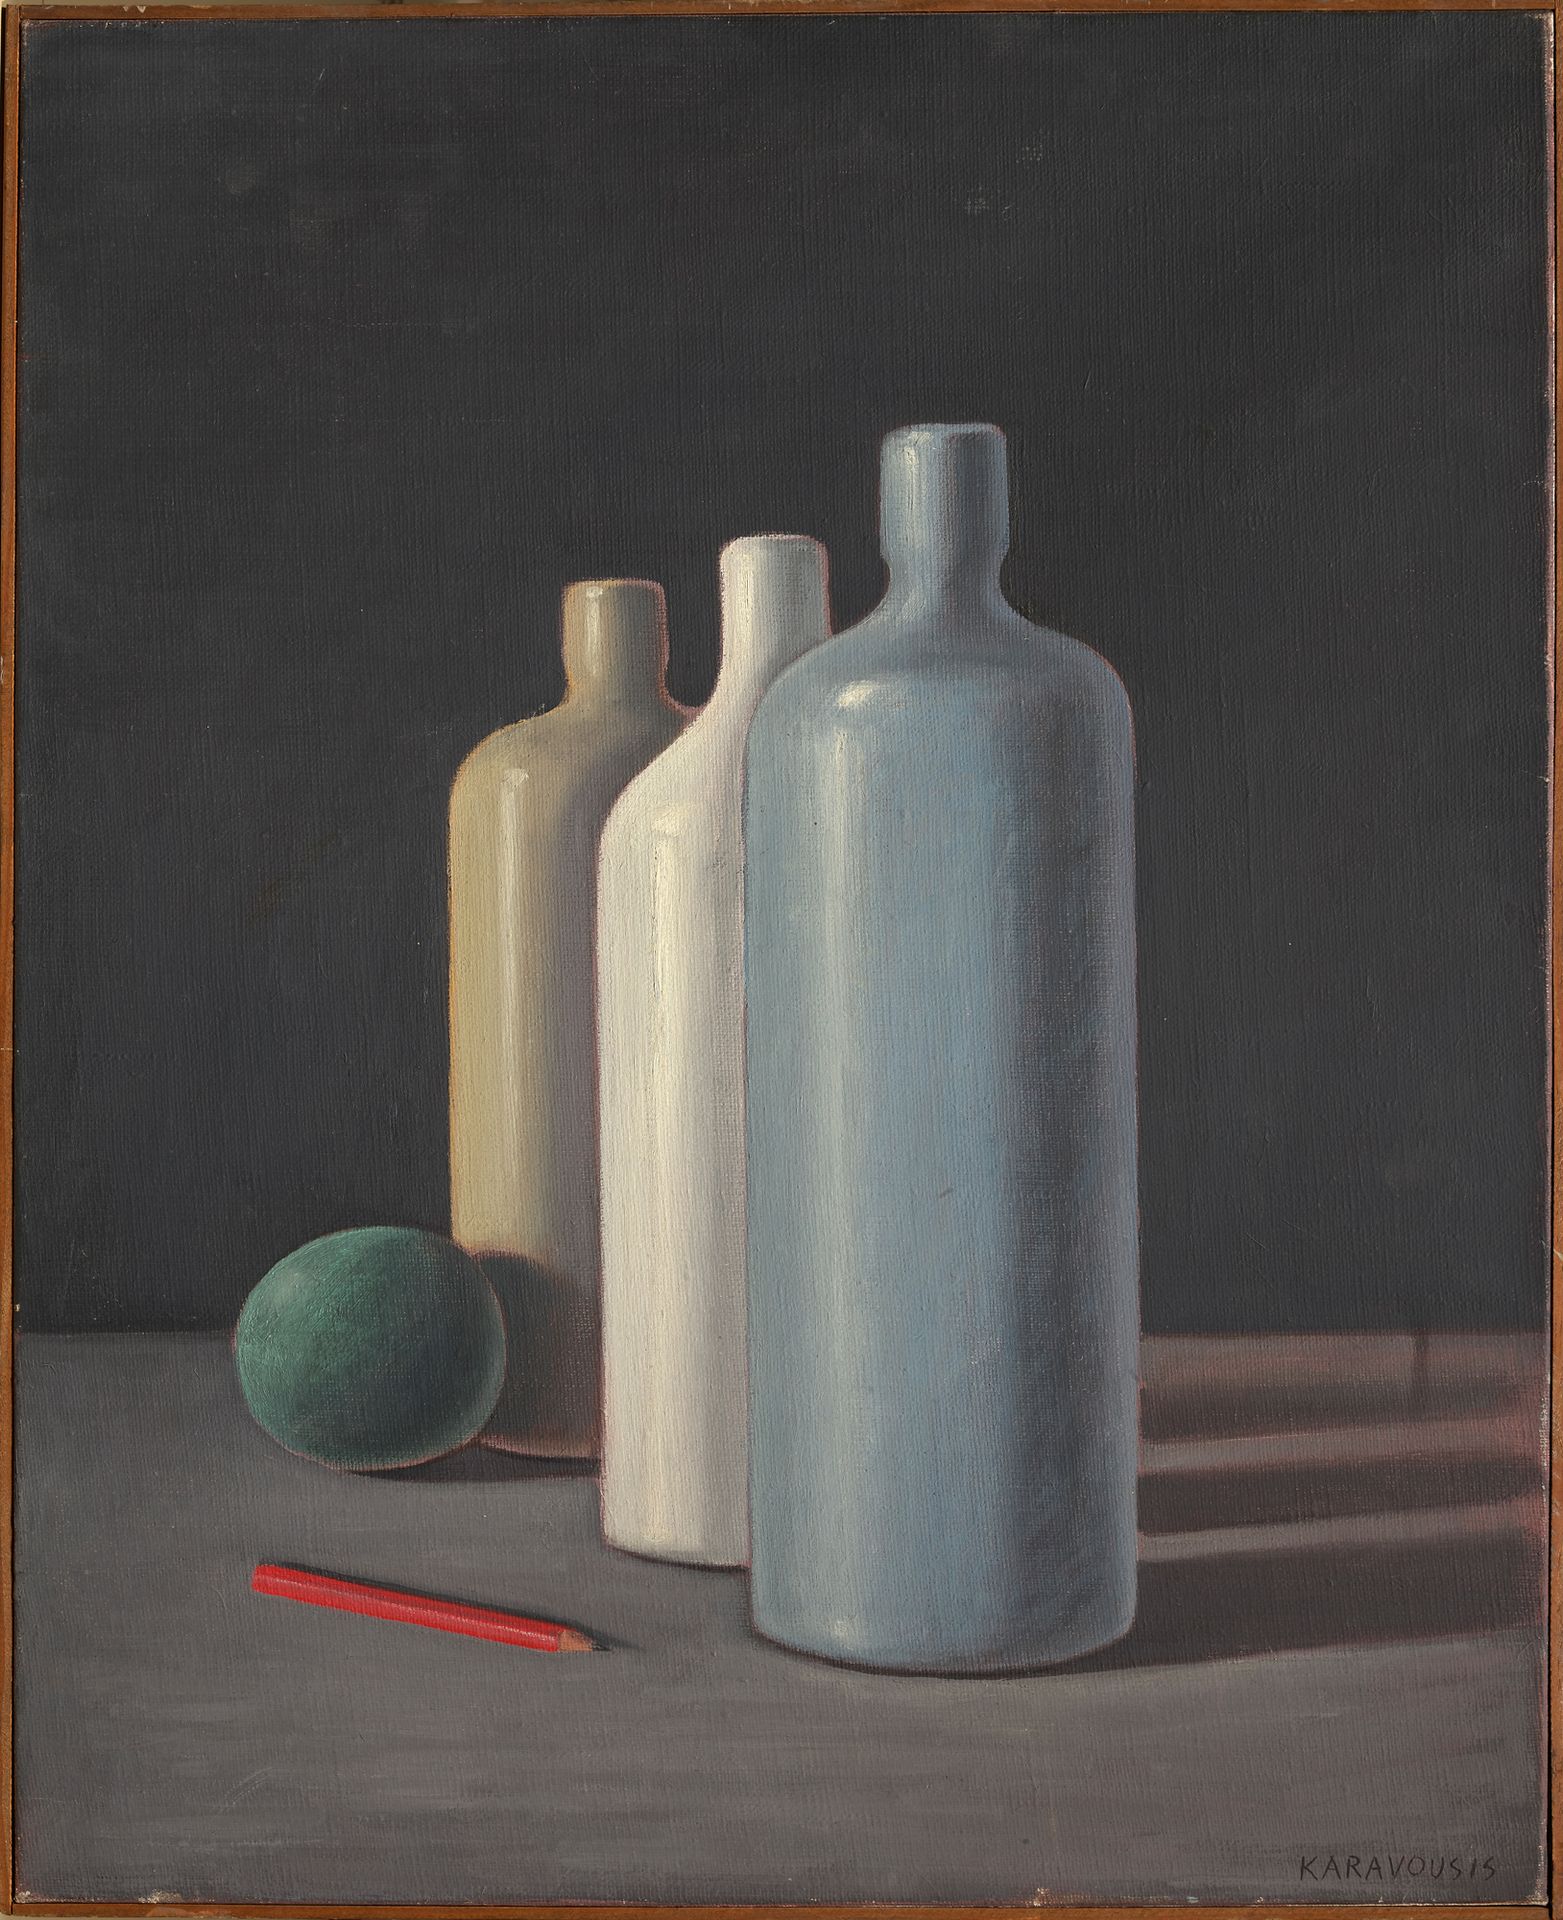 Sarandis KARAVOUSIS (1938-2011) 
有三个瓶子的静物
布面油画，右下方有签名
61 x 46 cm